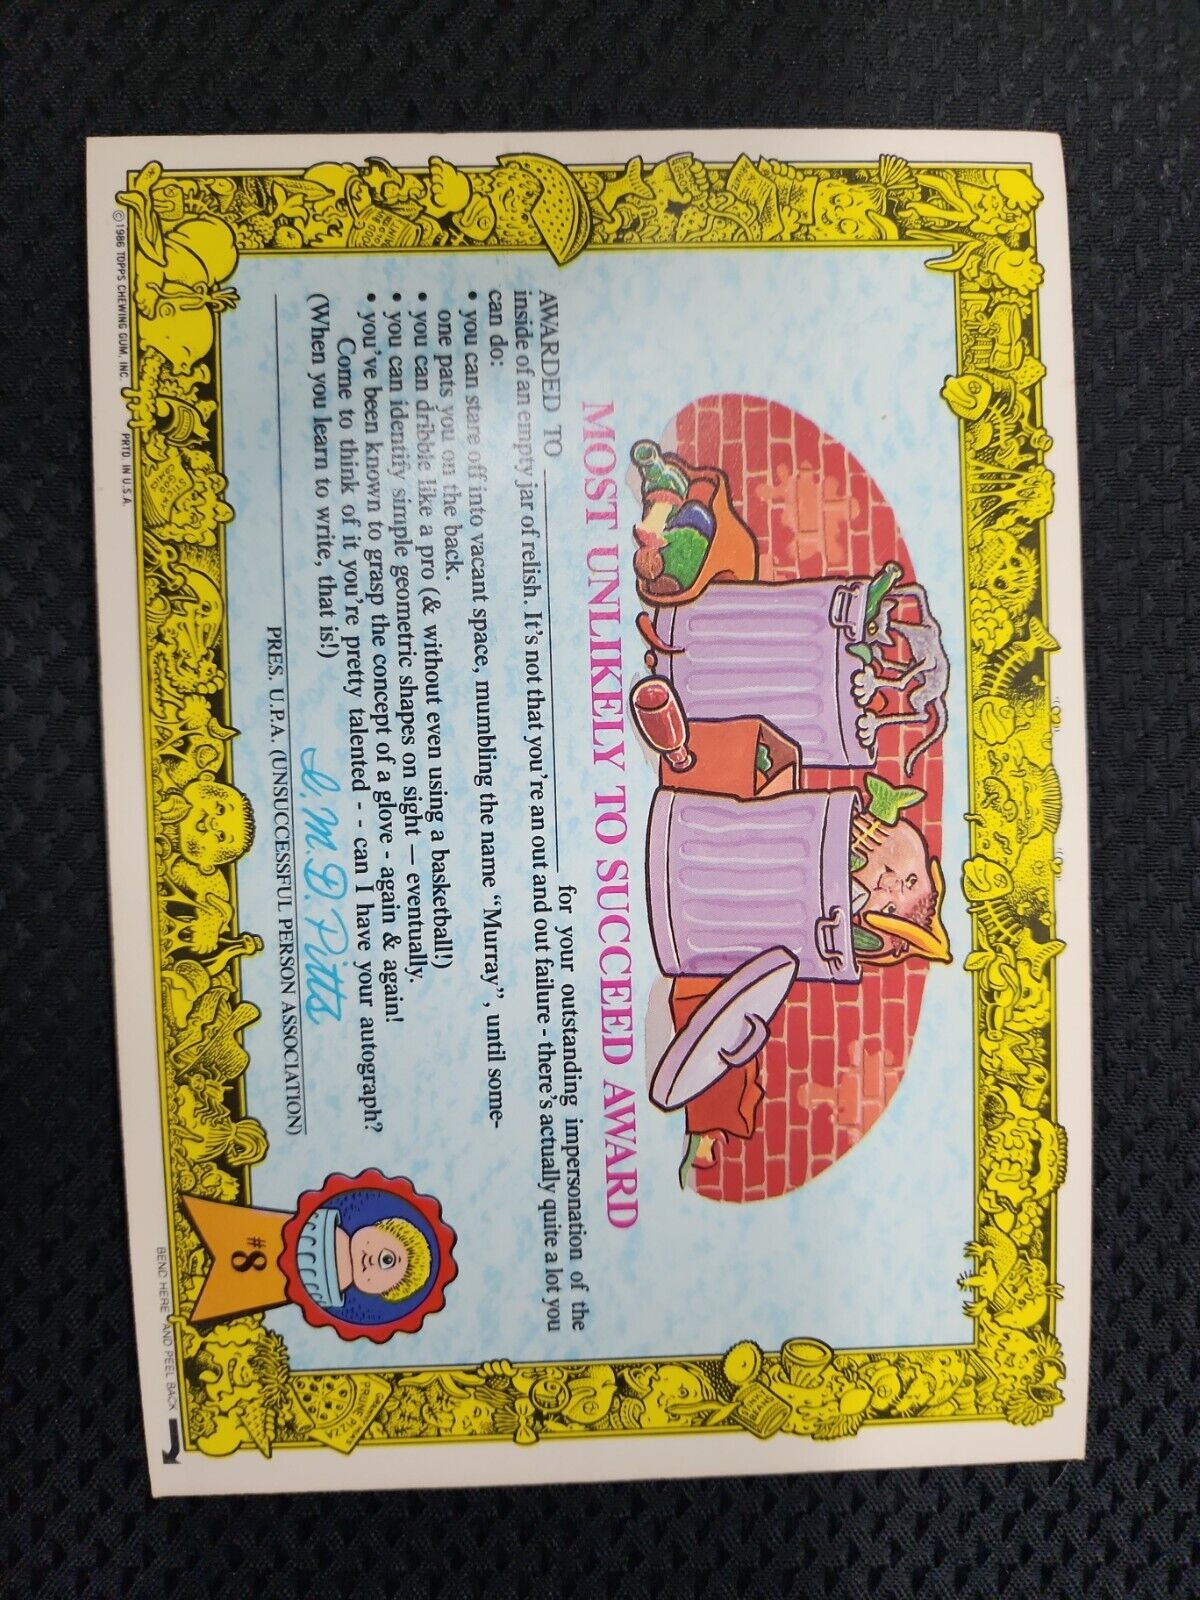 1986 Garbage Pail Kids Giant Sticker #8 Take A GPK To Lunch Card 5X7